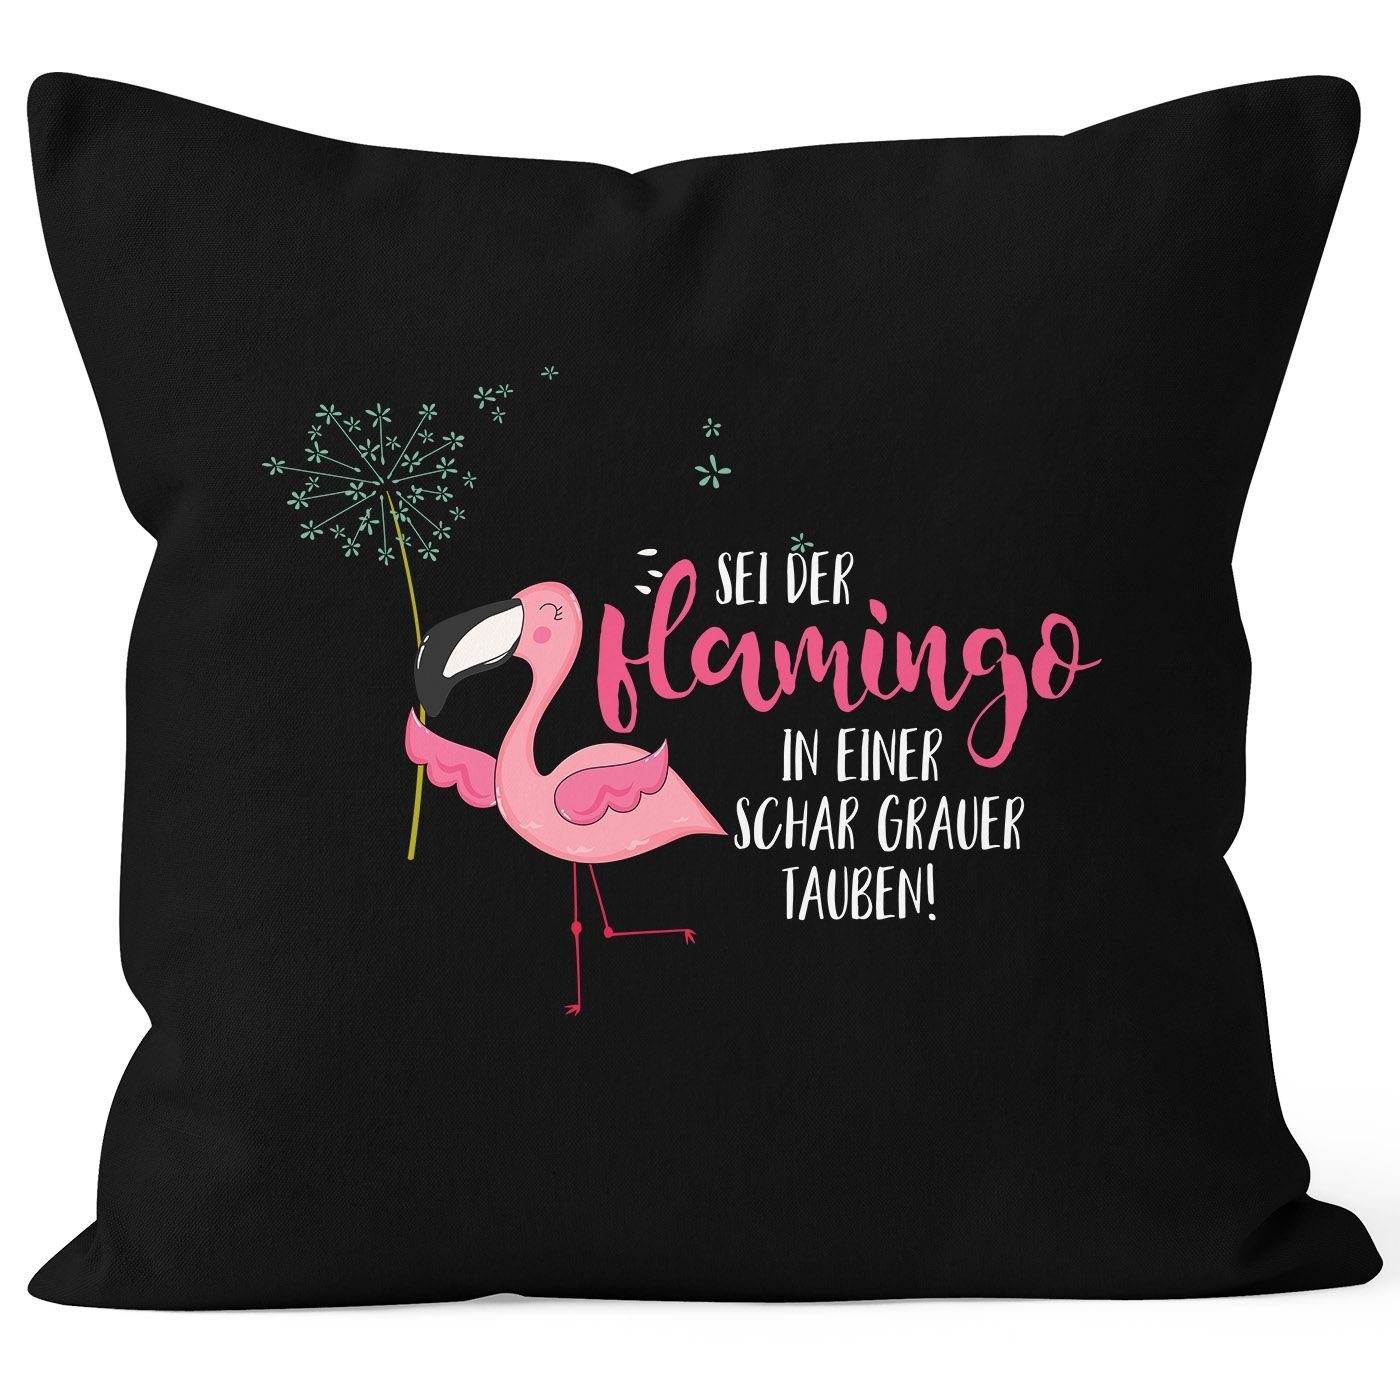 MoonWorks Dekokissen Kissenbezug sei der Flamingo in einer Schar grauer Tauben Flamingo Pusteblume Kissen-Hülle Deko-Kissen 40x40 Baumwolle MoonWorks® schwarz